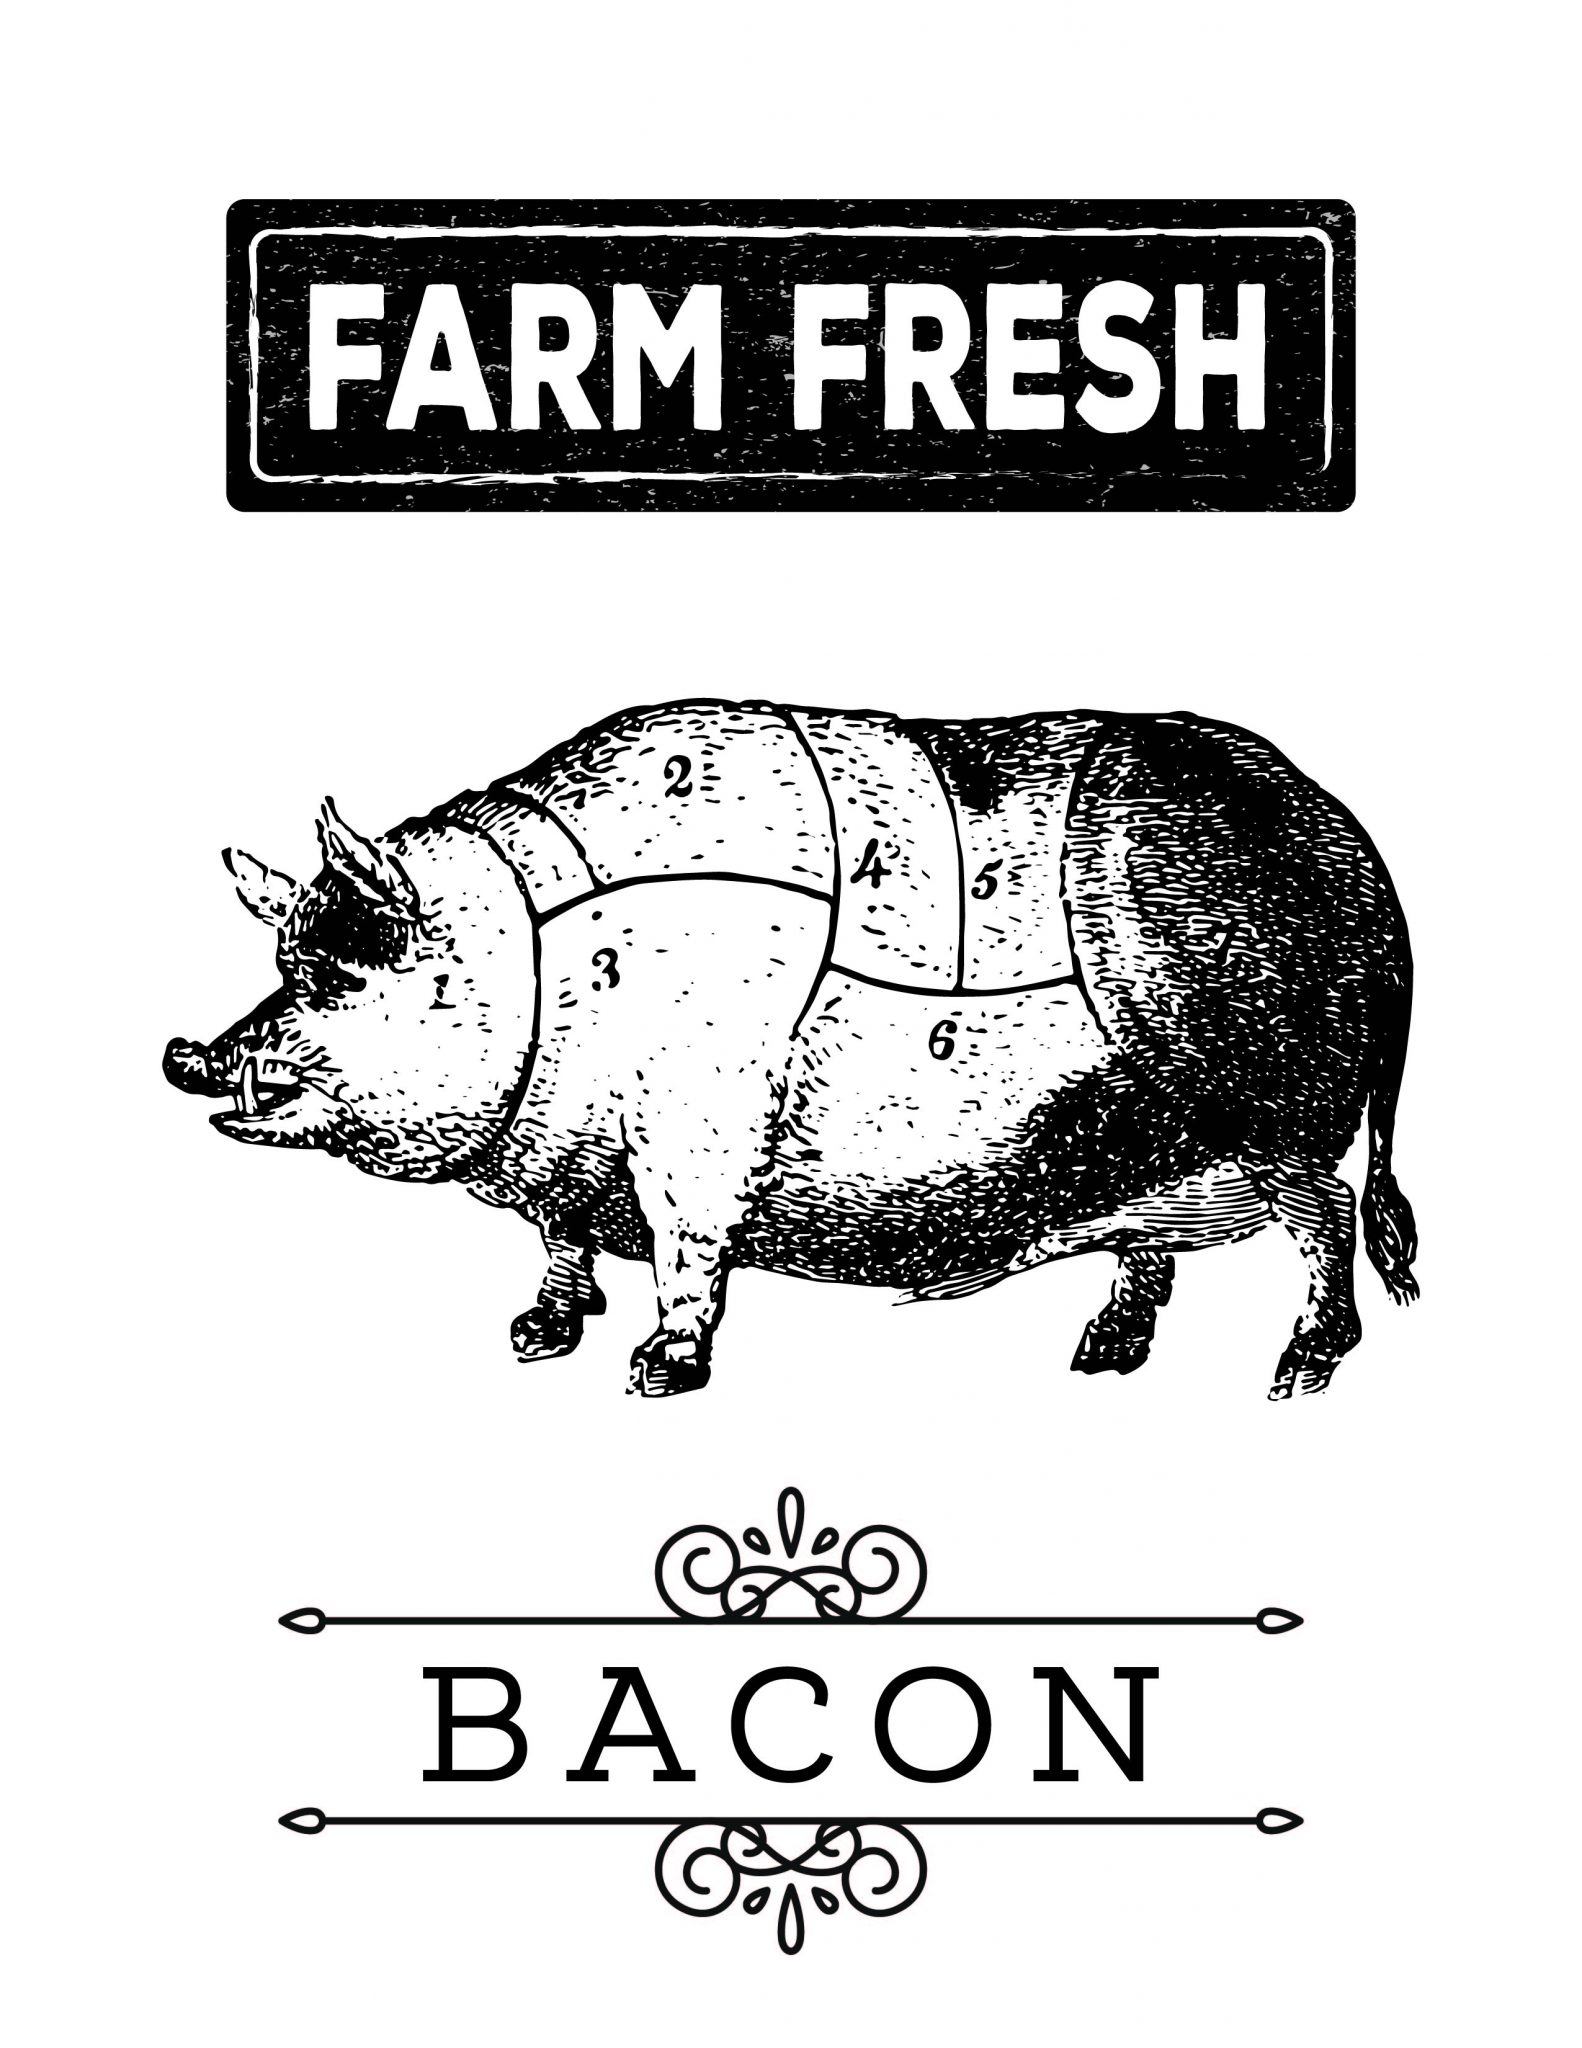 FREE Printable Farmhouse Pig Wall Art 